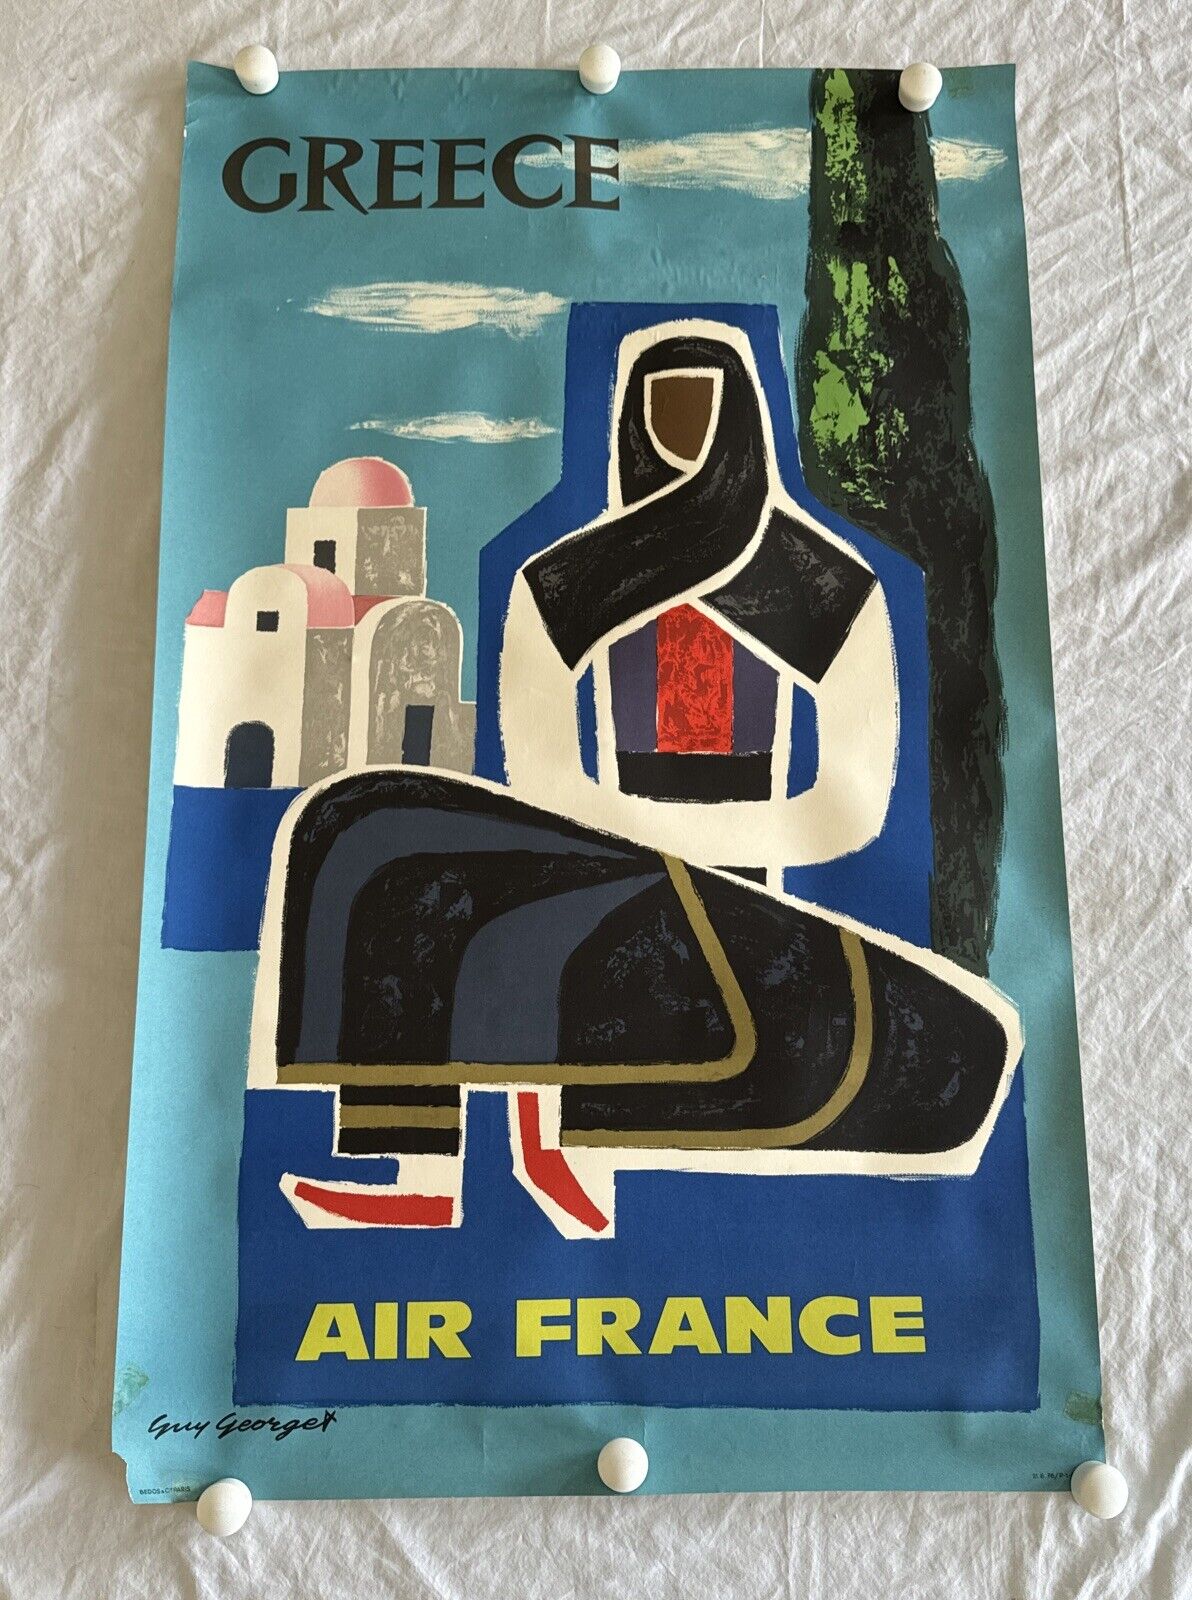 Original 1963 AIR FRANCE GREECE Travel Poster, 24x39, Guy Georget Art